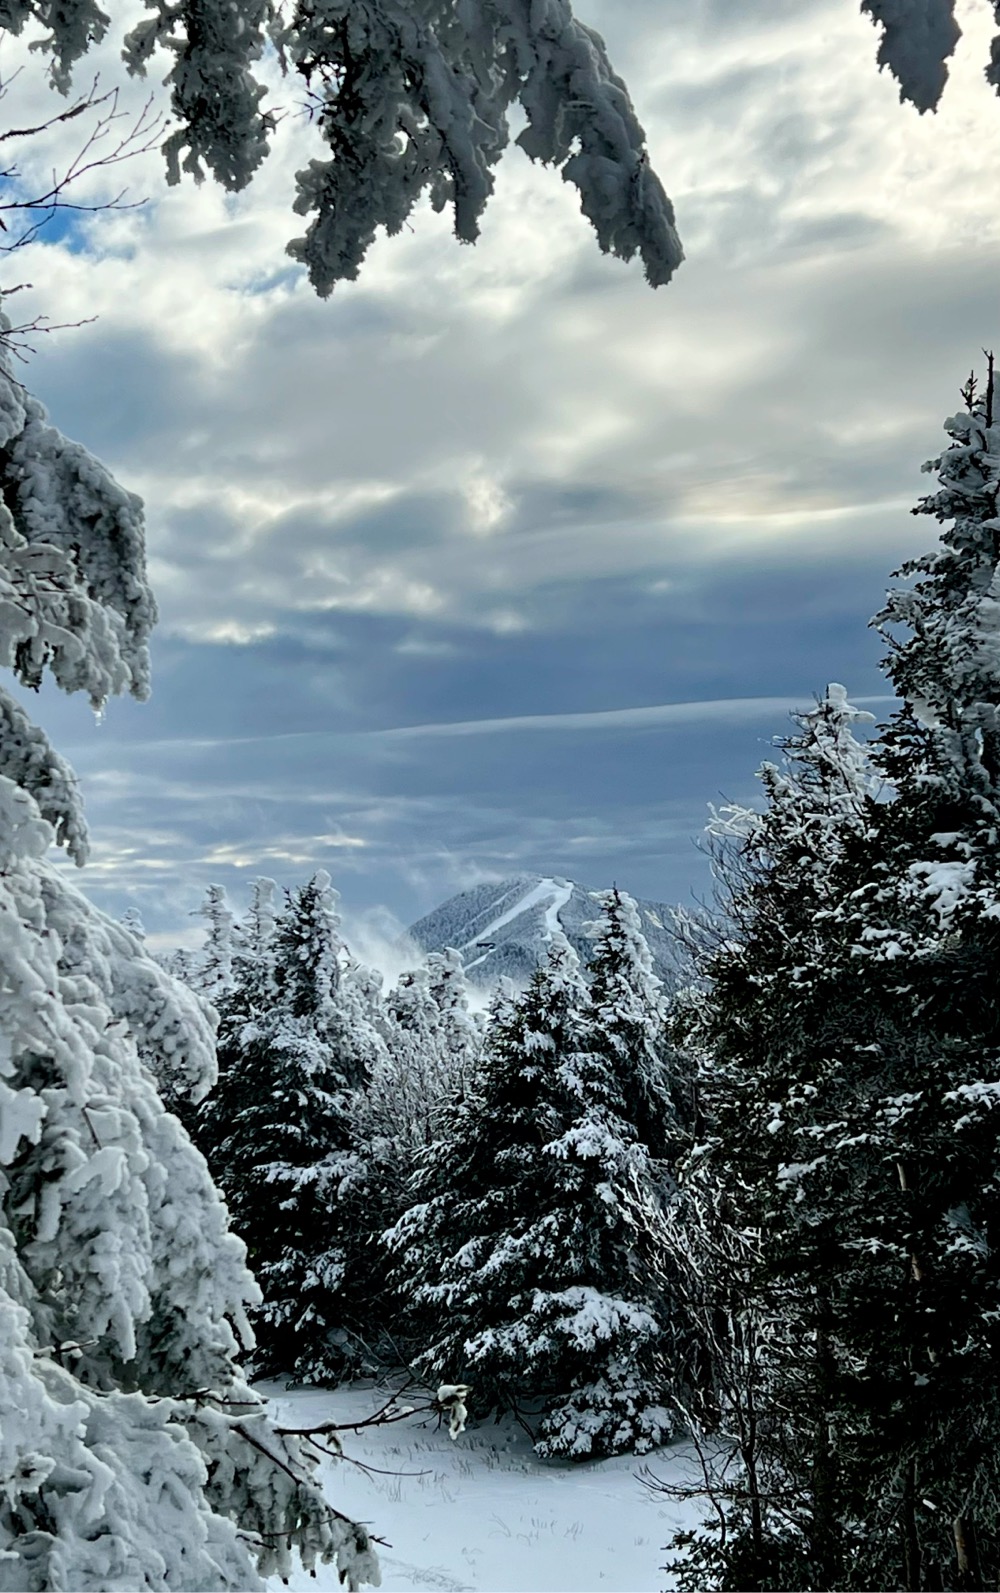 a snowy peak through the trees